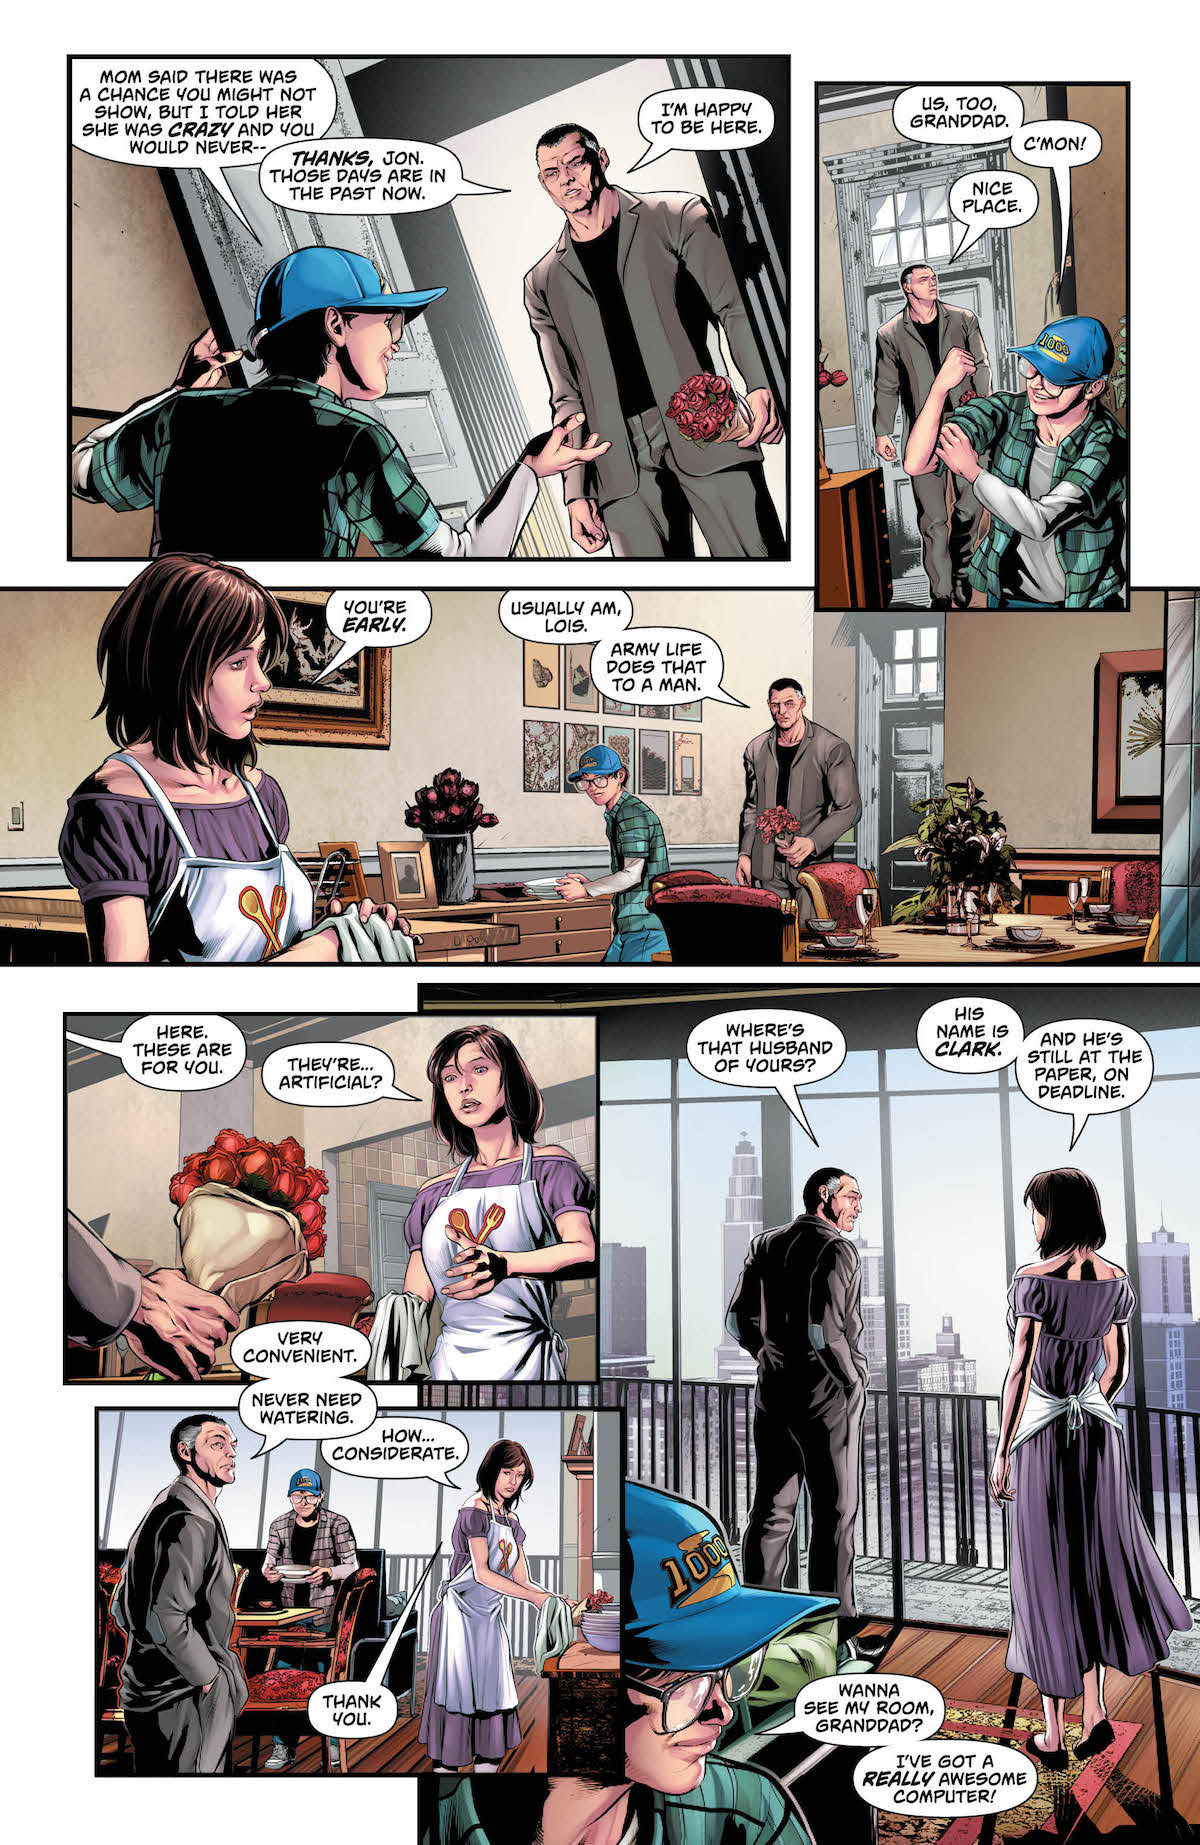 Action Comics #999 page 2